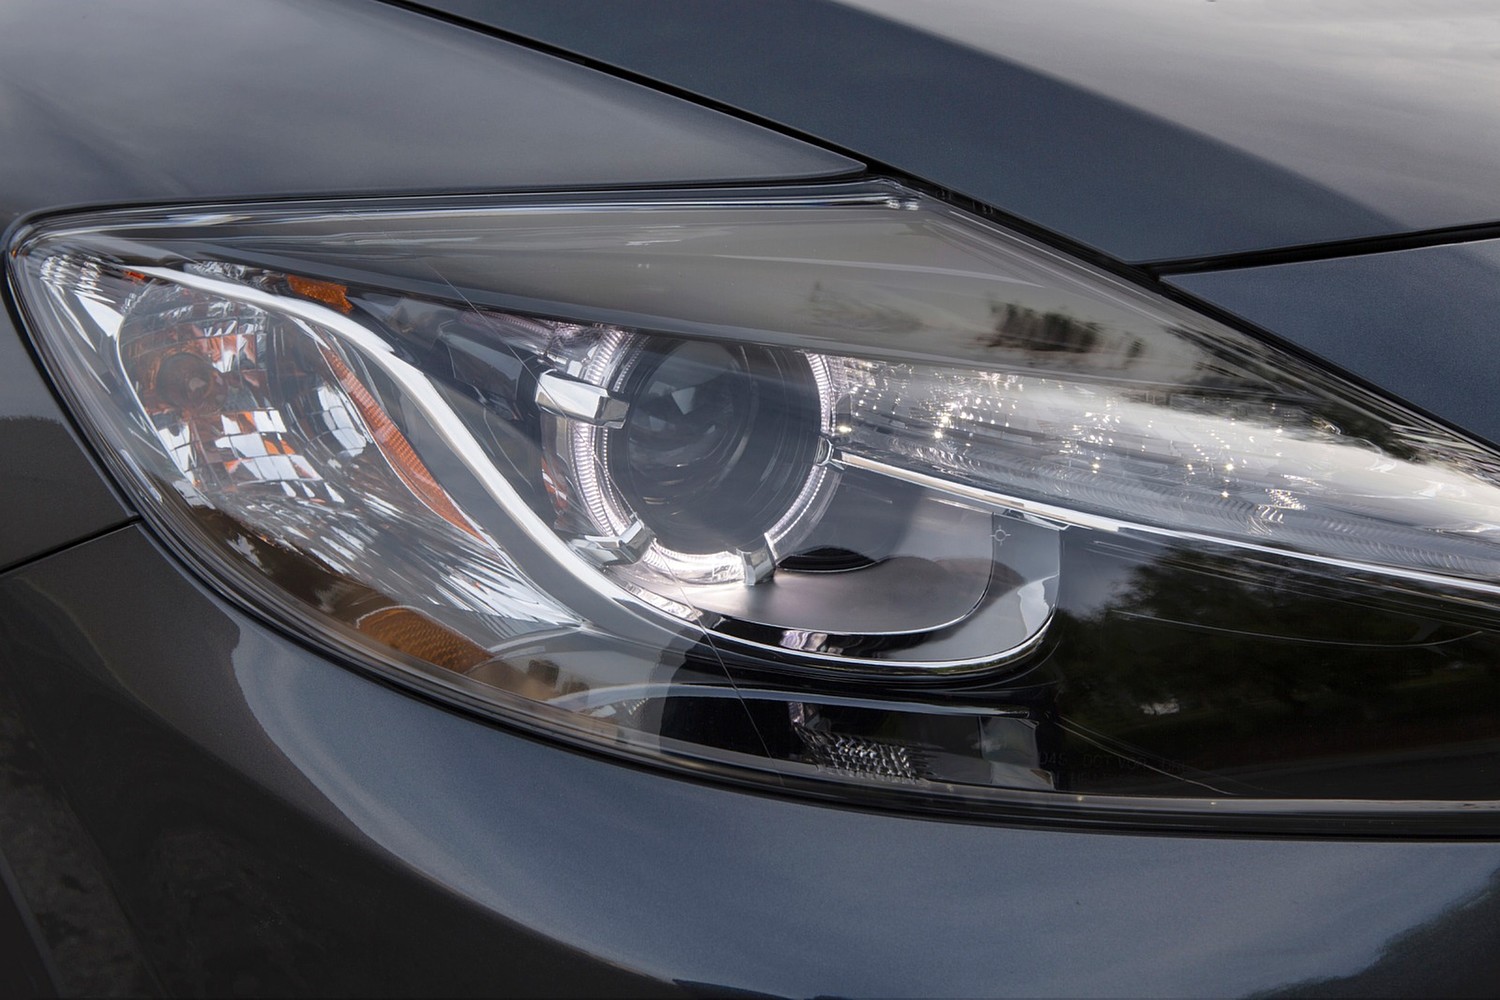 Mazda CX-9 Headlamp Detail (2013 model year shown)